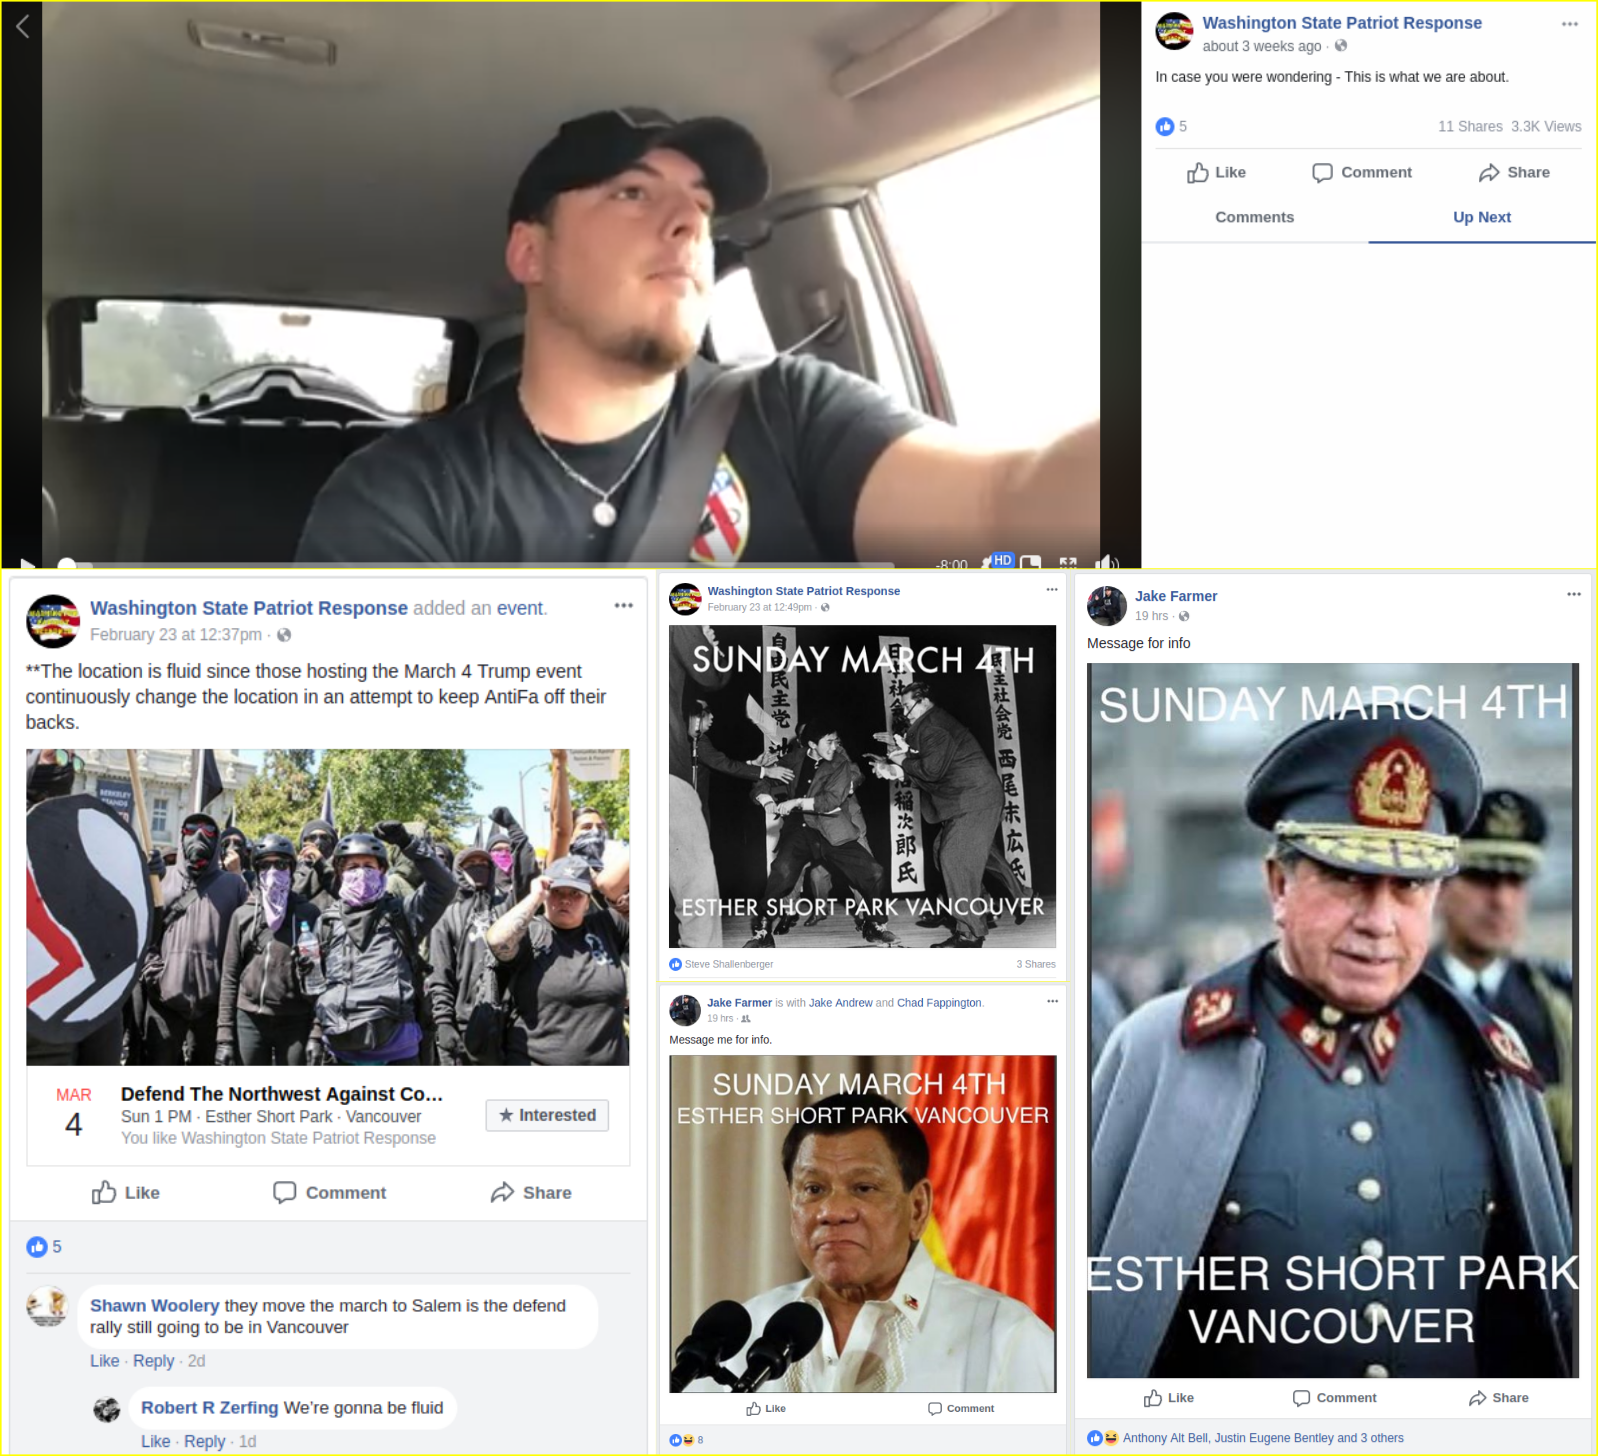 Washington State Patriot Response threatens fascist violence and murder on facebook